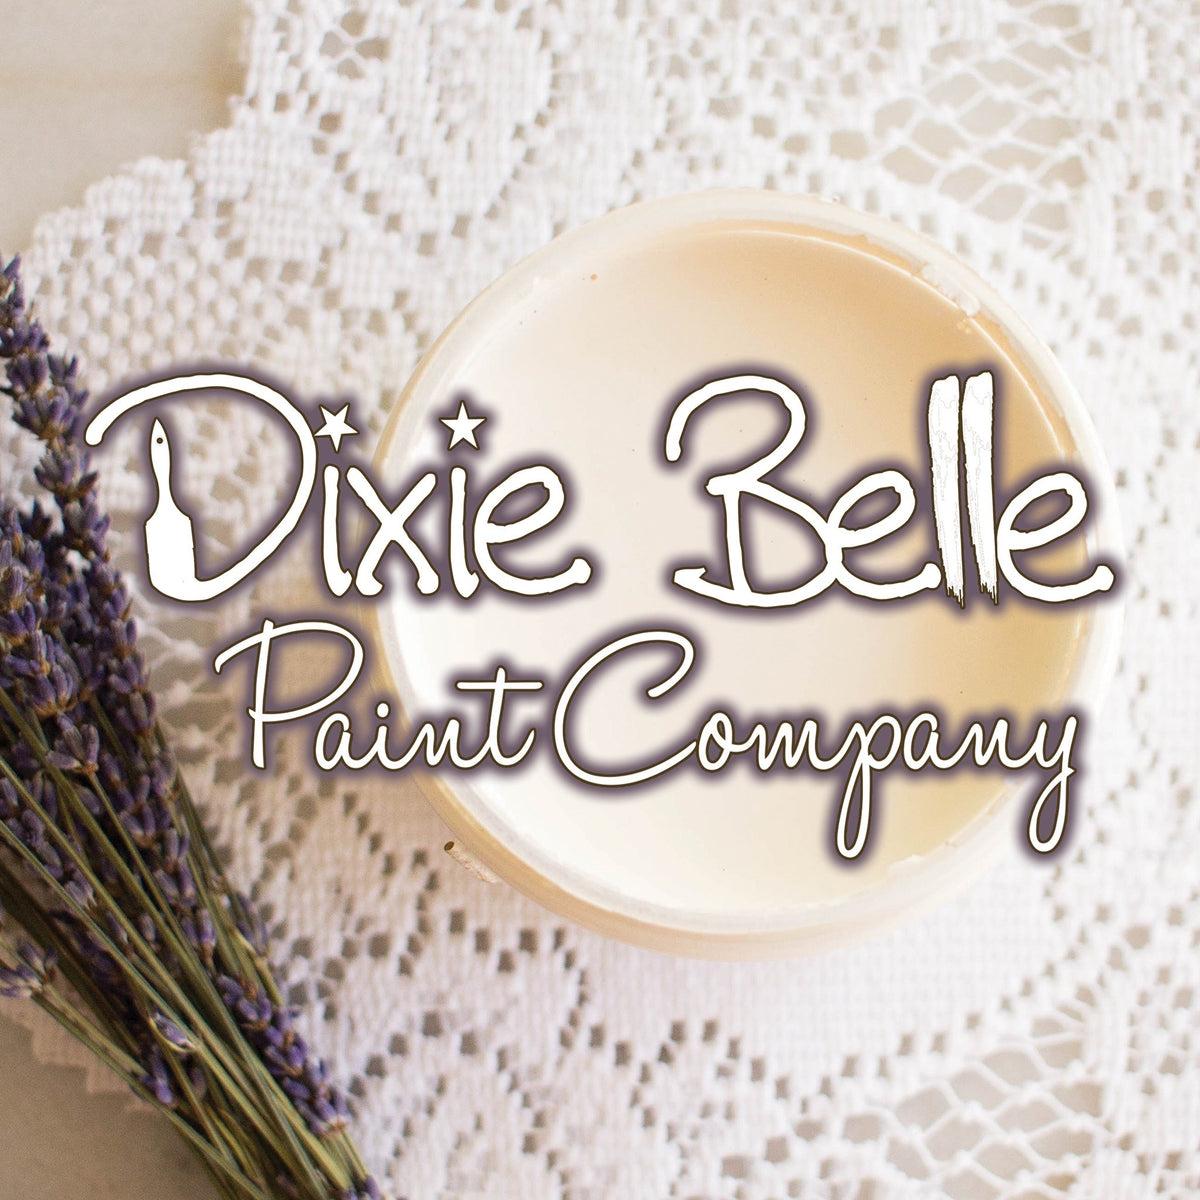 Dixie Belle - Gator Hide 16 oz